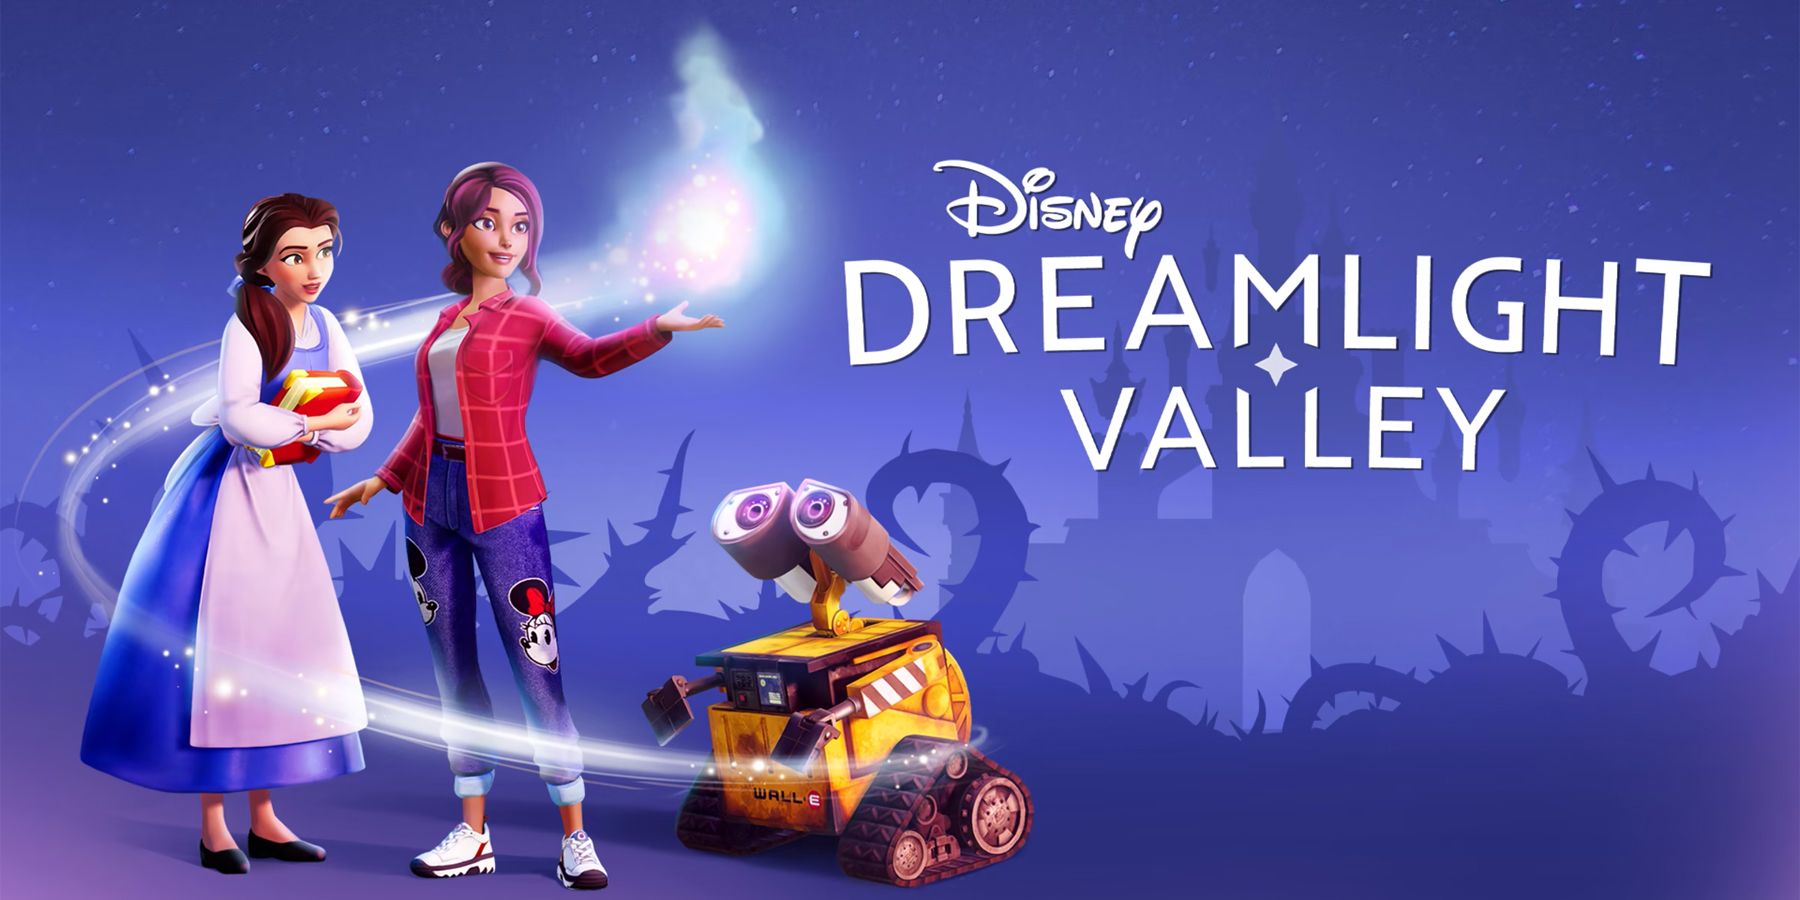 Disney Dreamlight Valley Switch